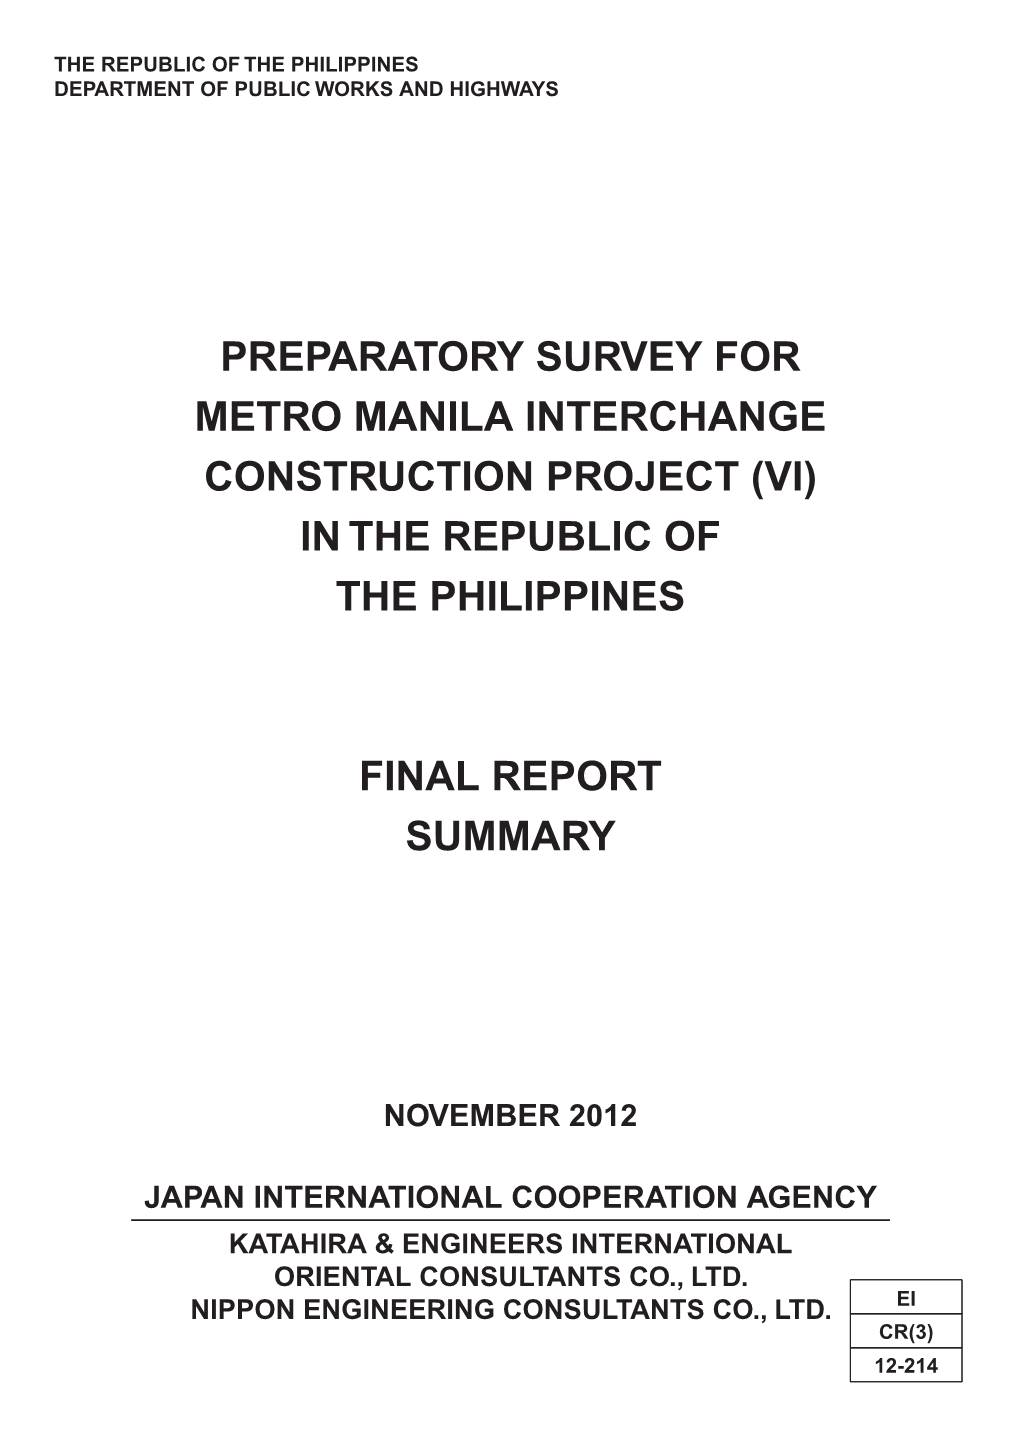 Preparatory Survey for Metro Manila Interchange Construction Project (Vi) in the Republic of the Philippines